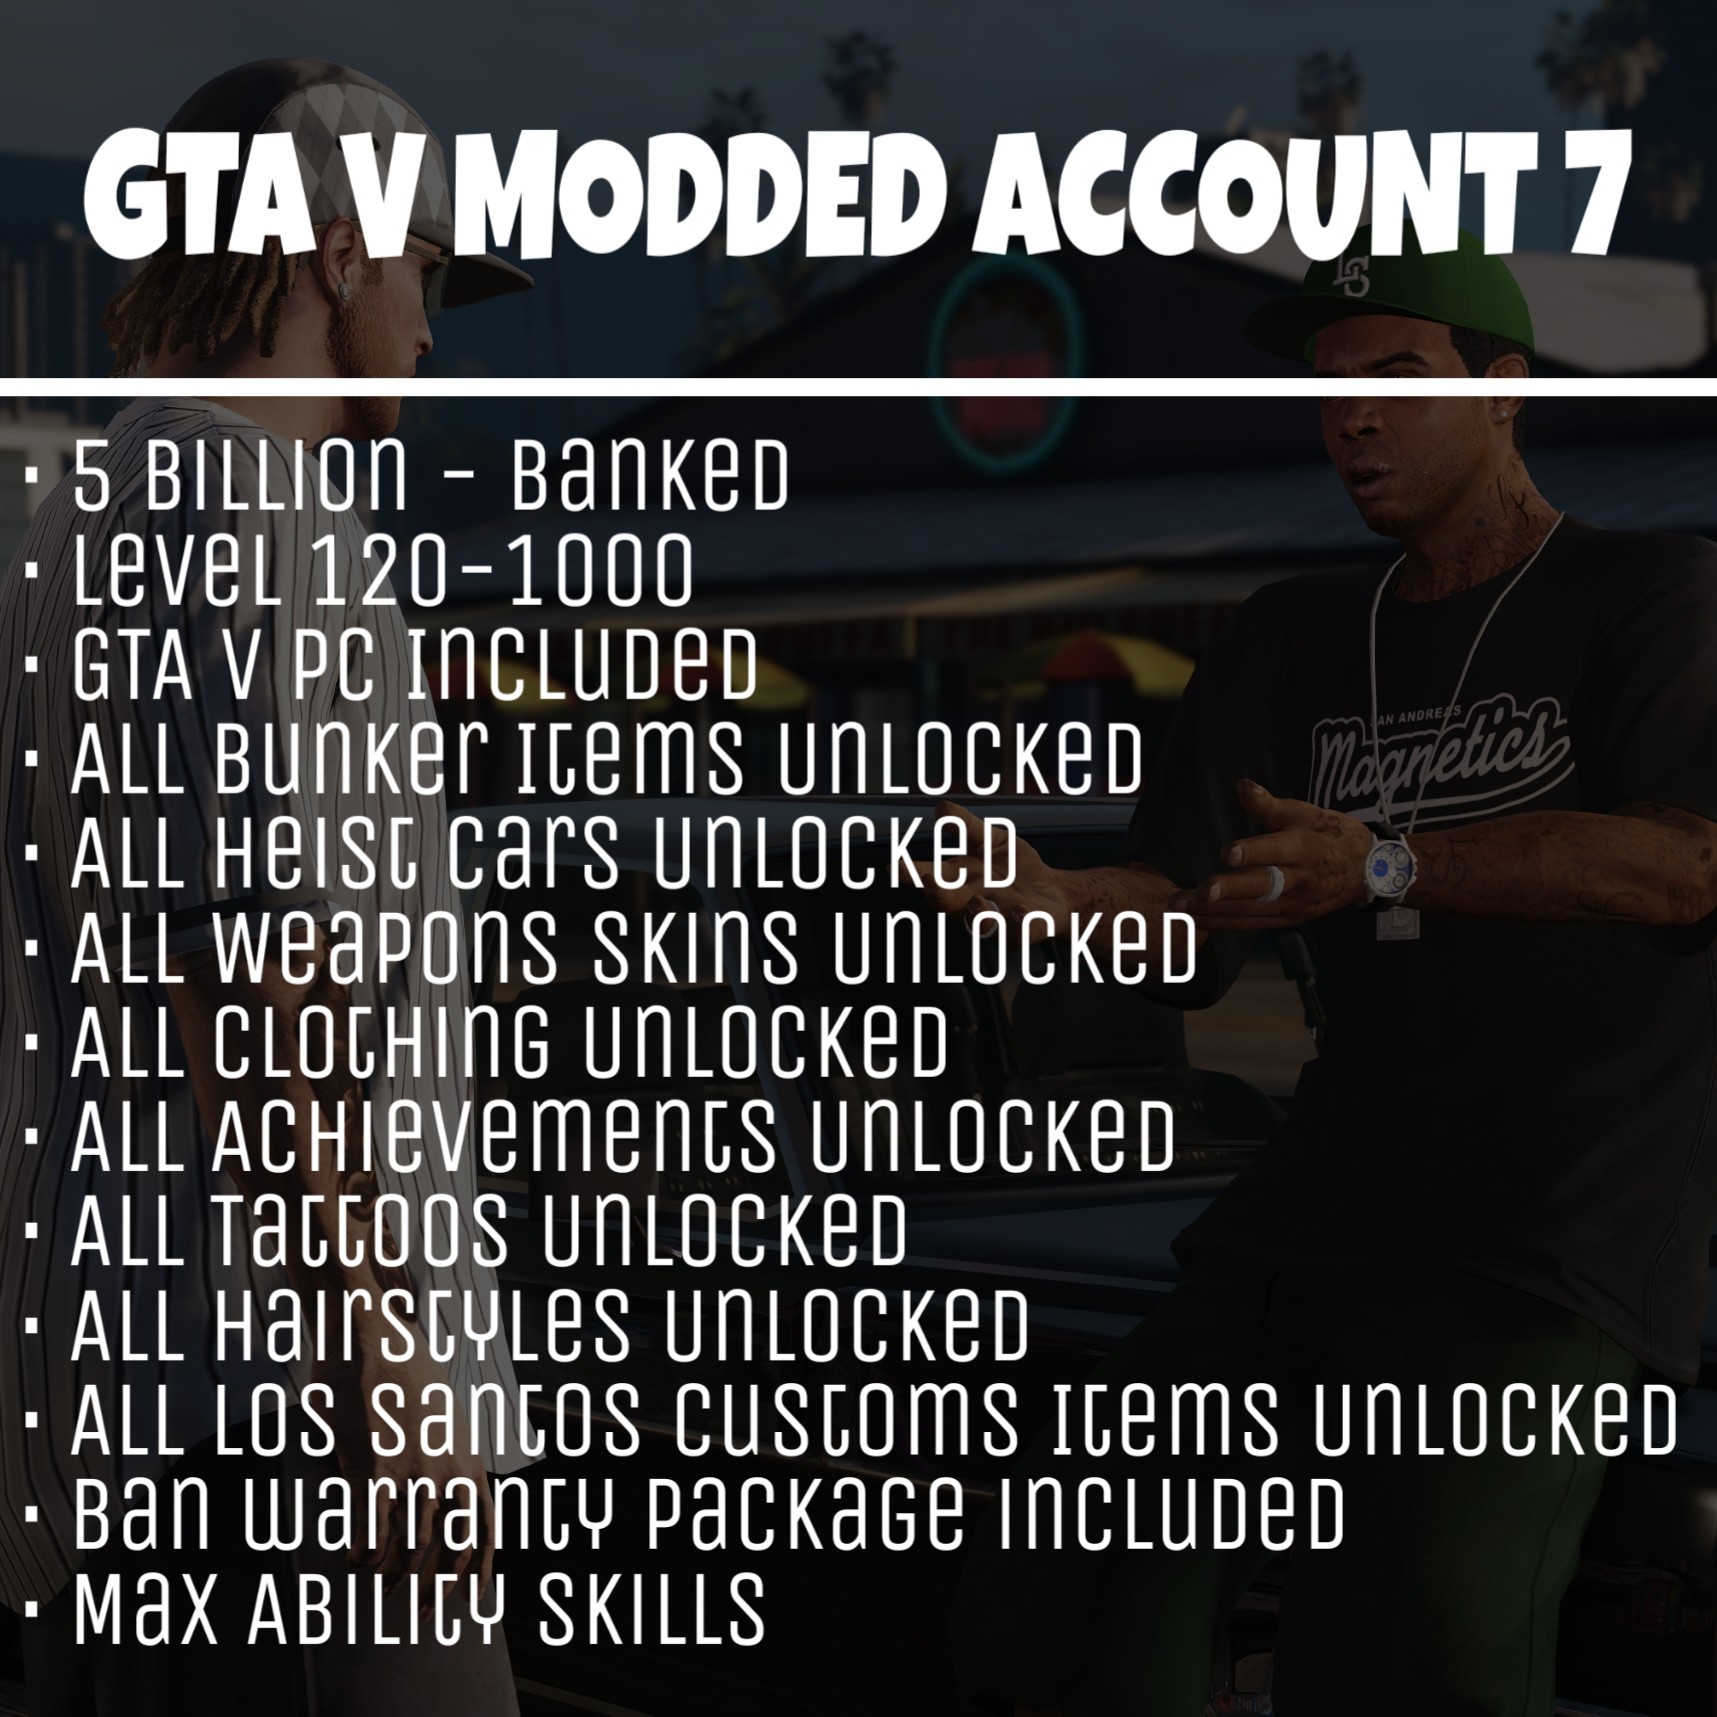 gta 5 modded accounts ebay